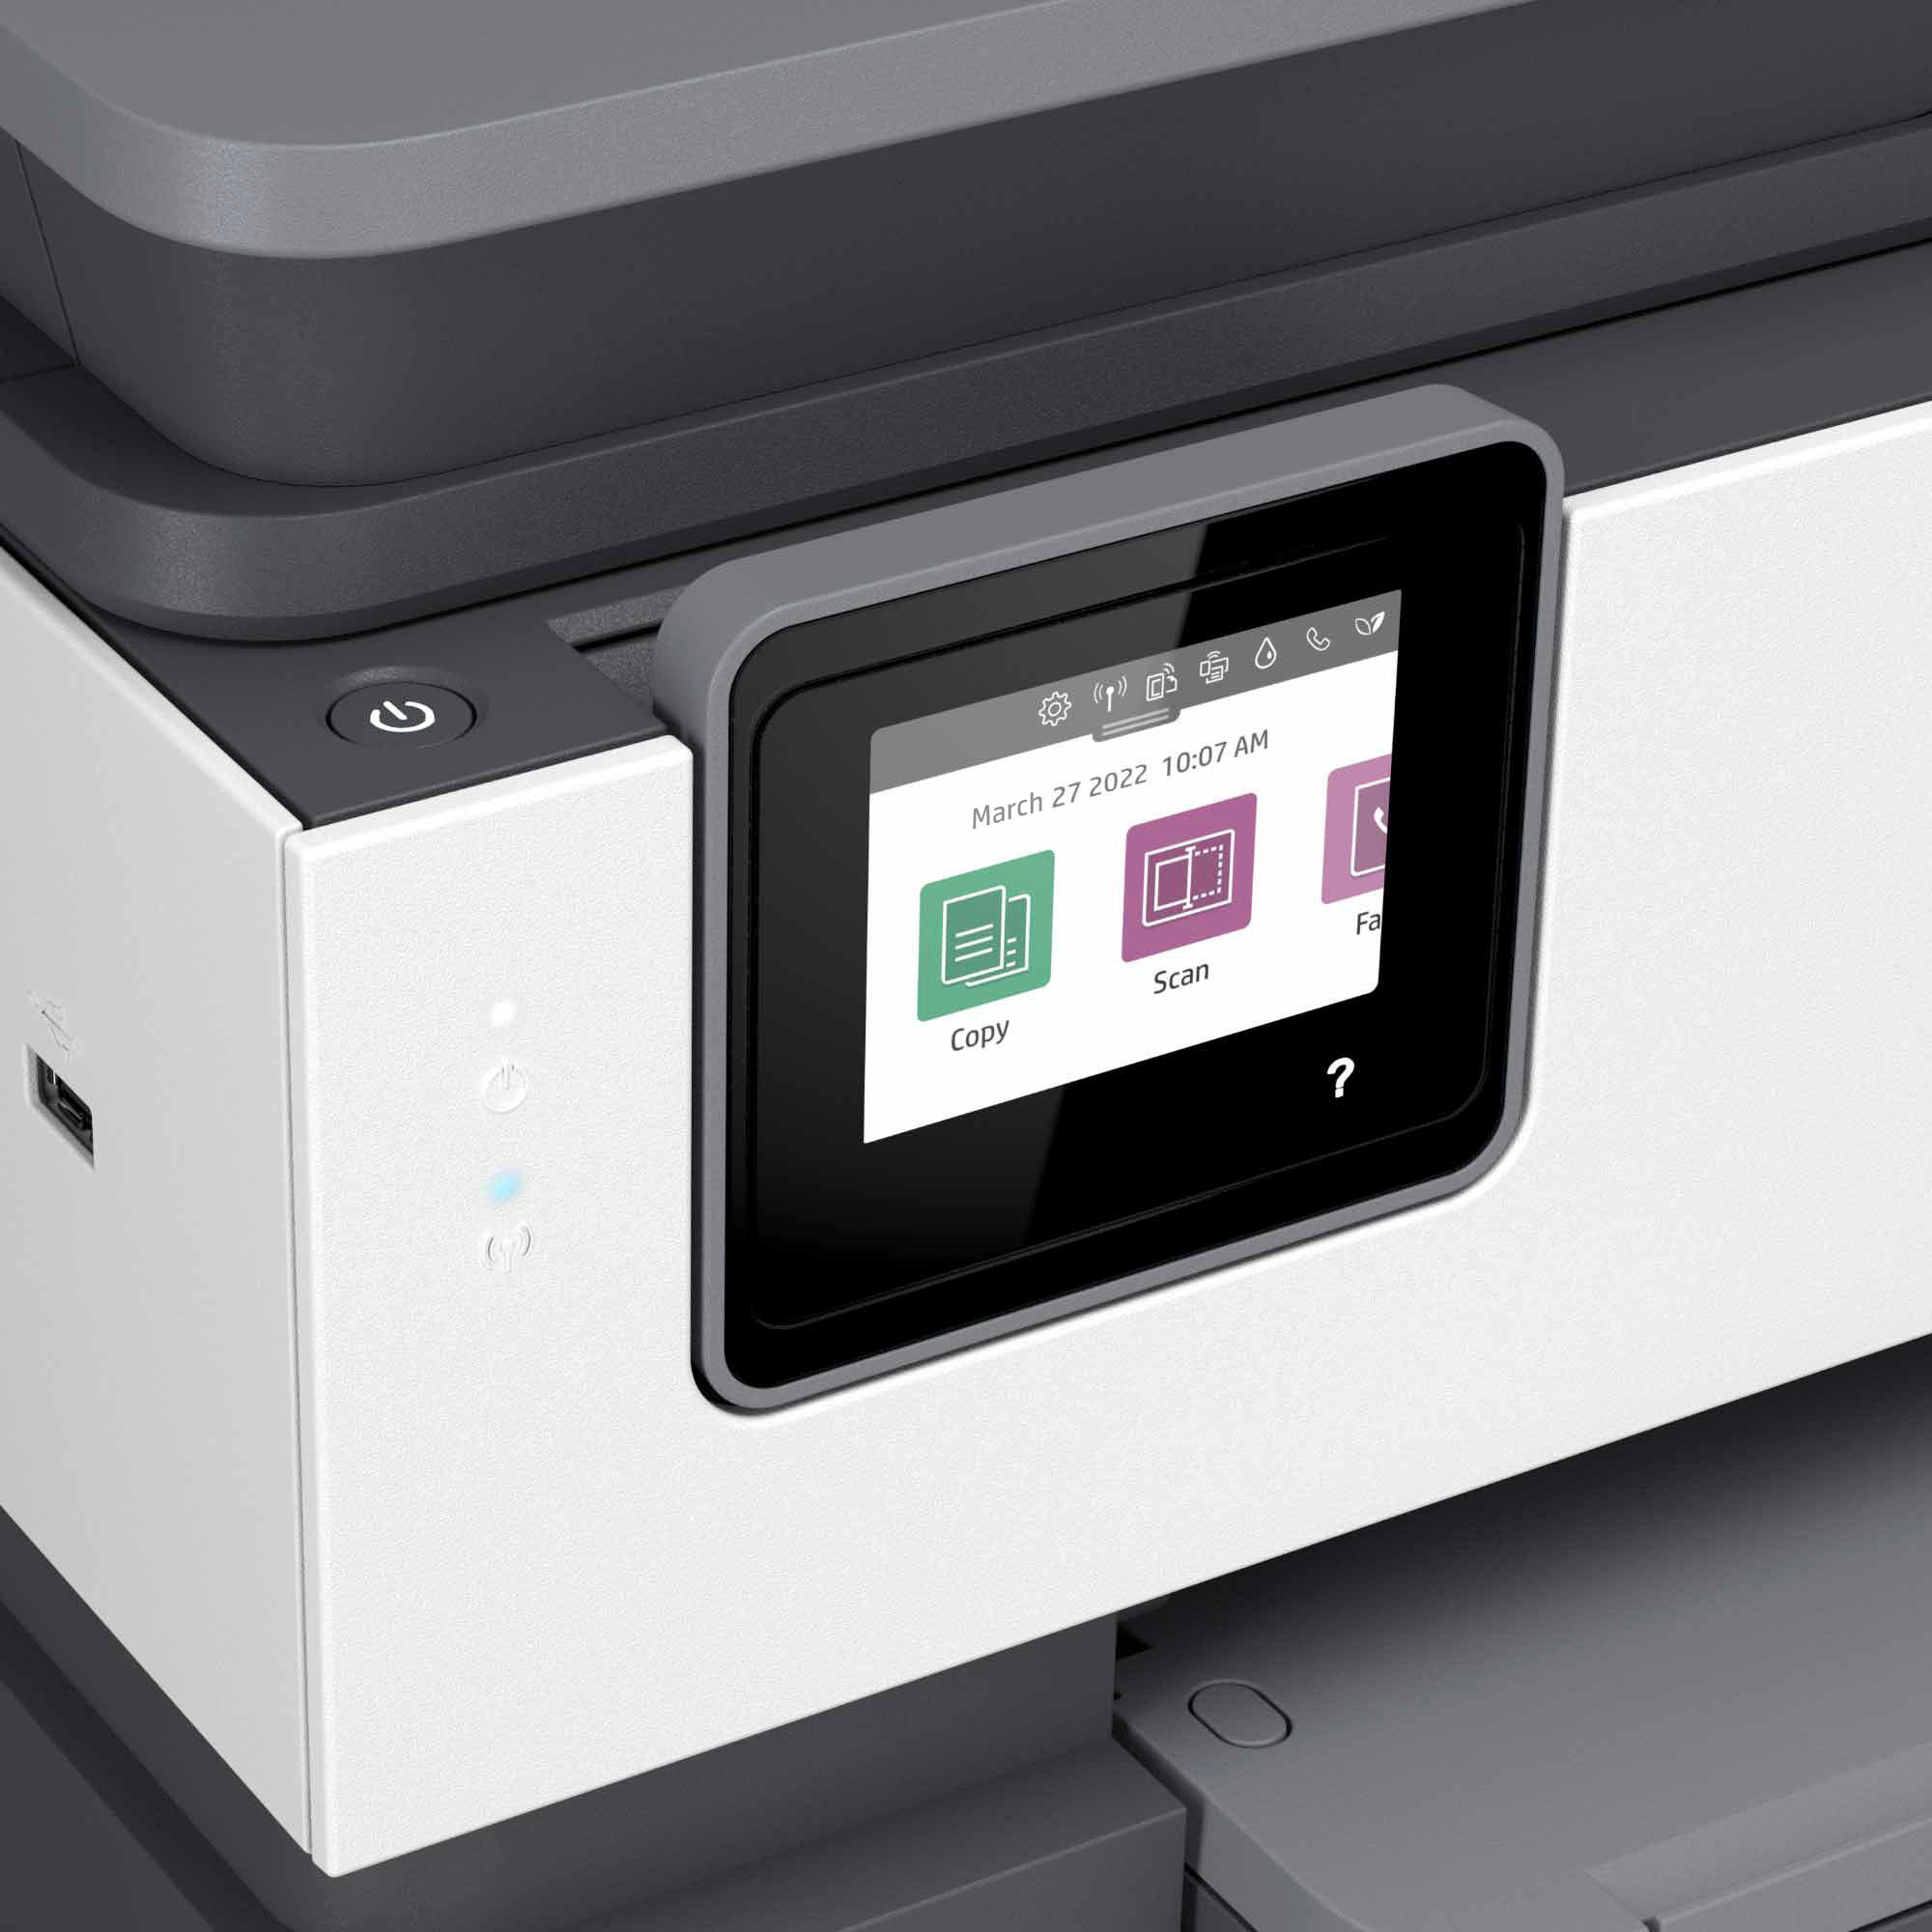 HP Officejet 100 Mobile Printer - Printer - color – DWINET Shopper Limited